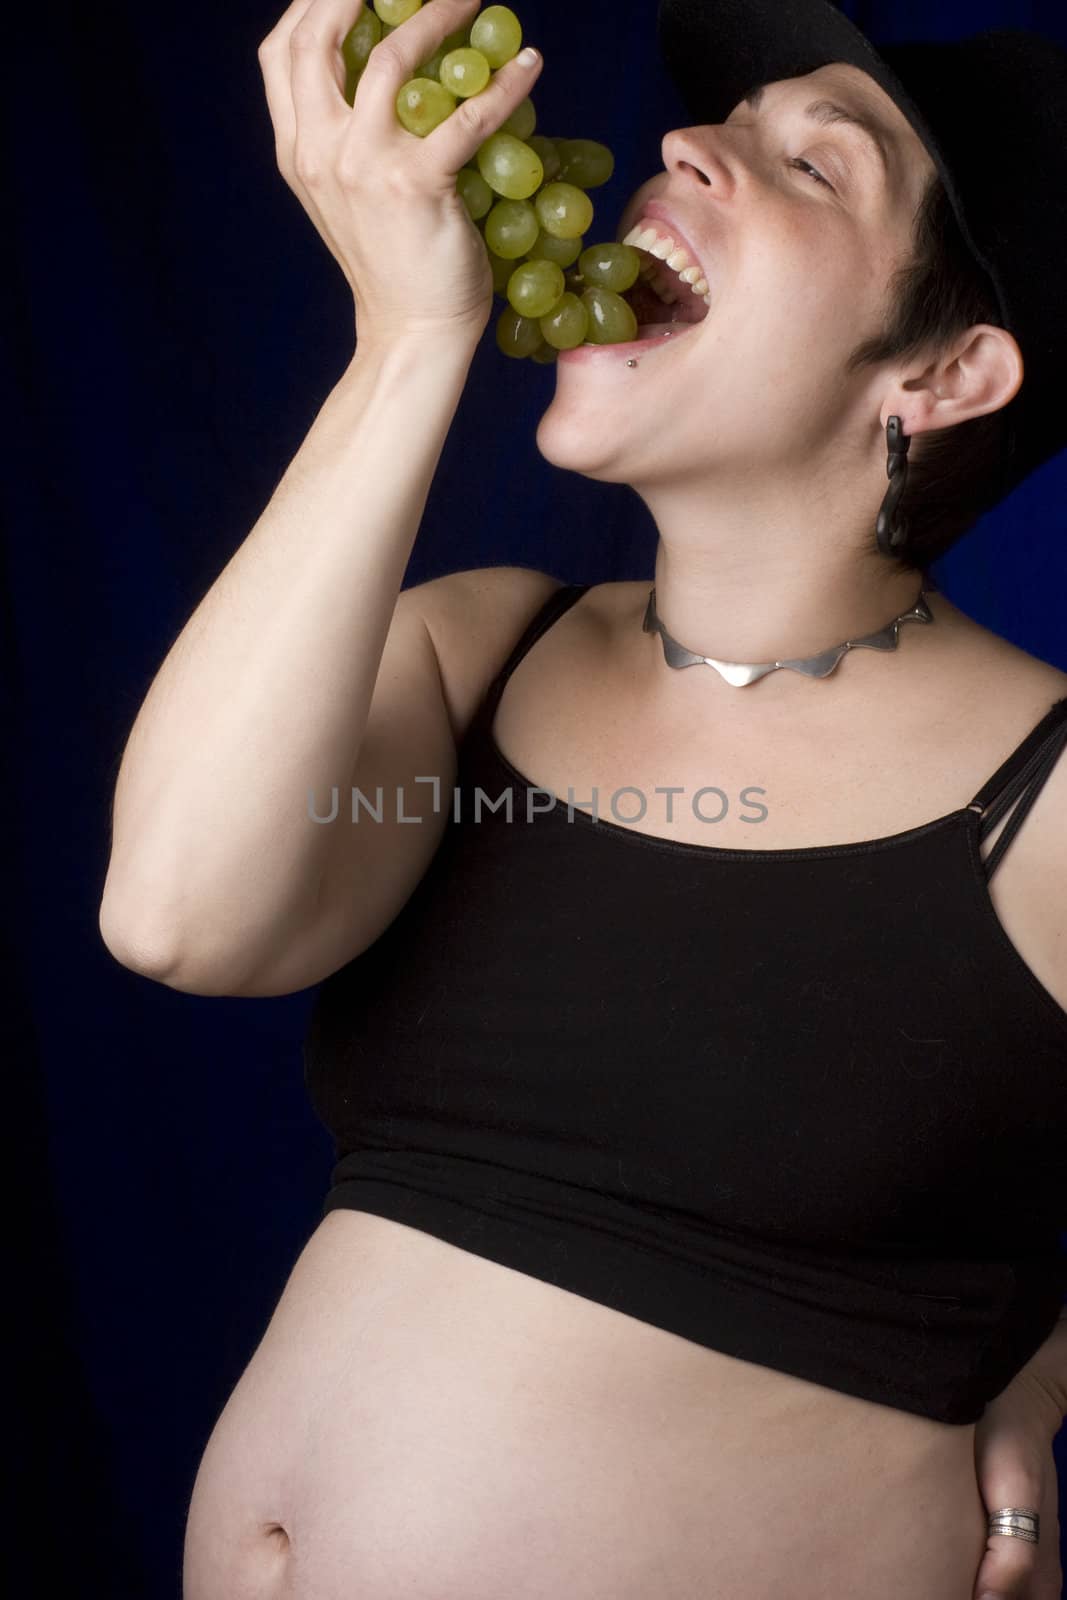 Twenty something pregnant women with boyish look eating green grapes